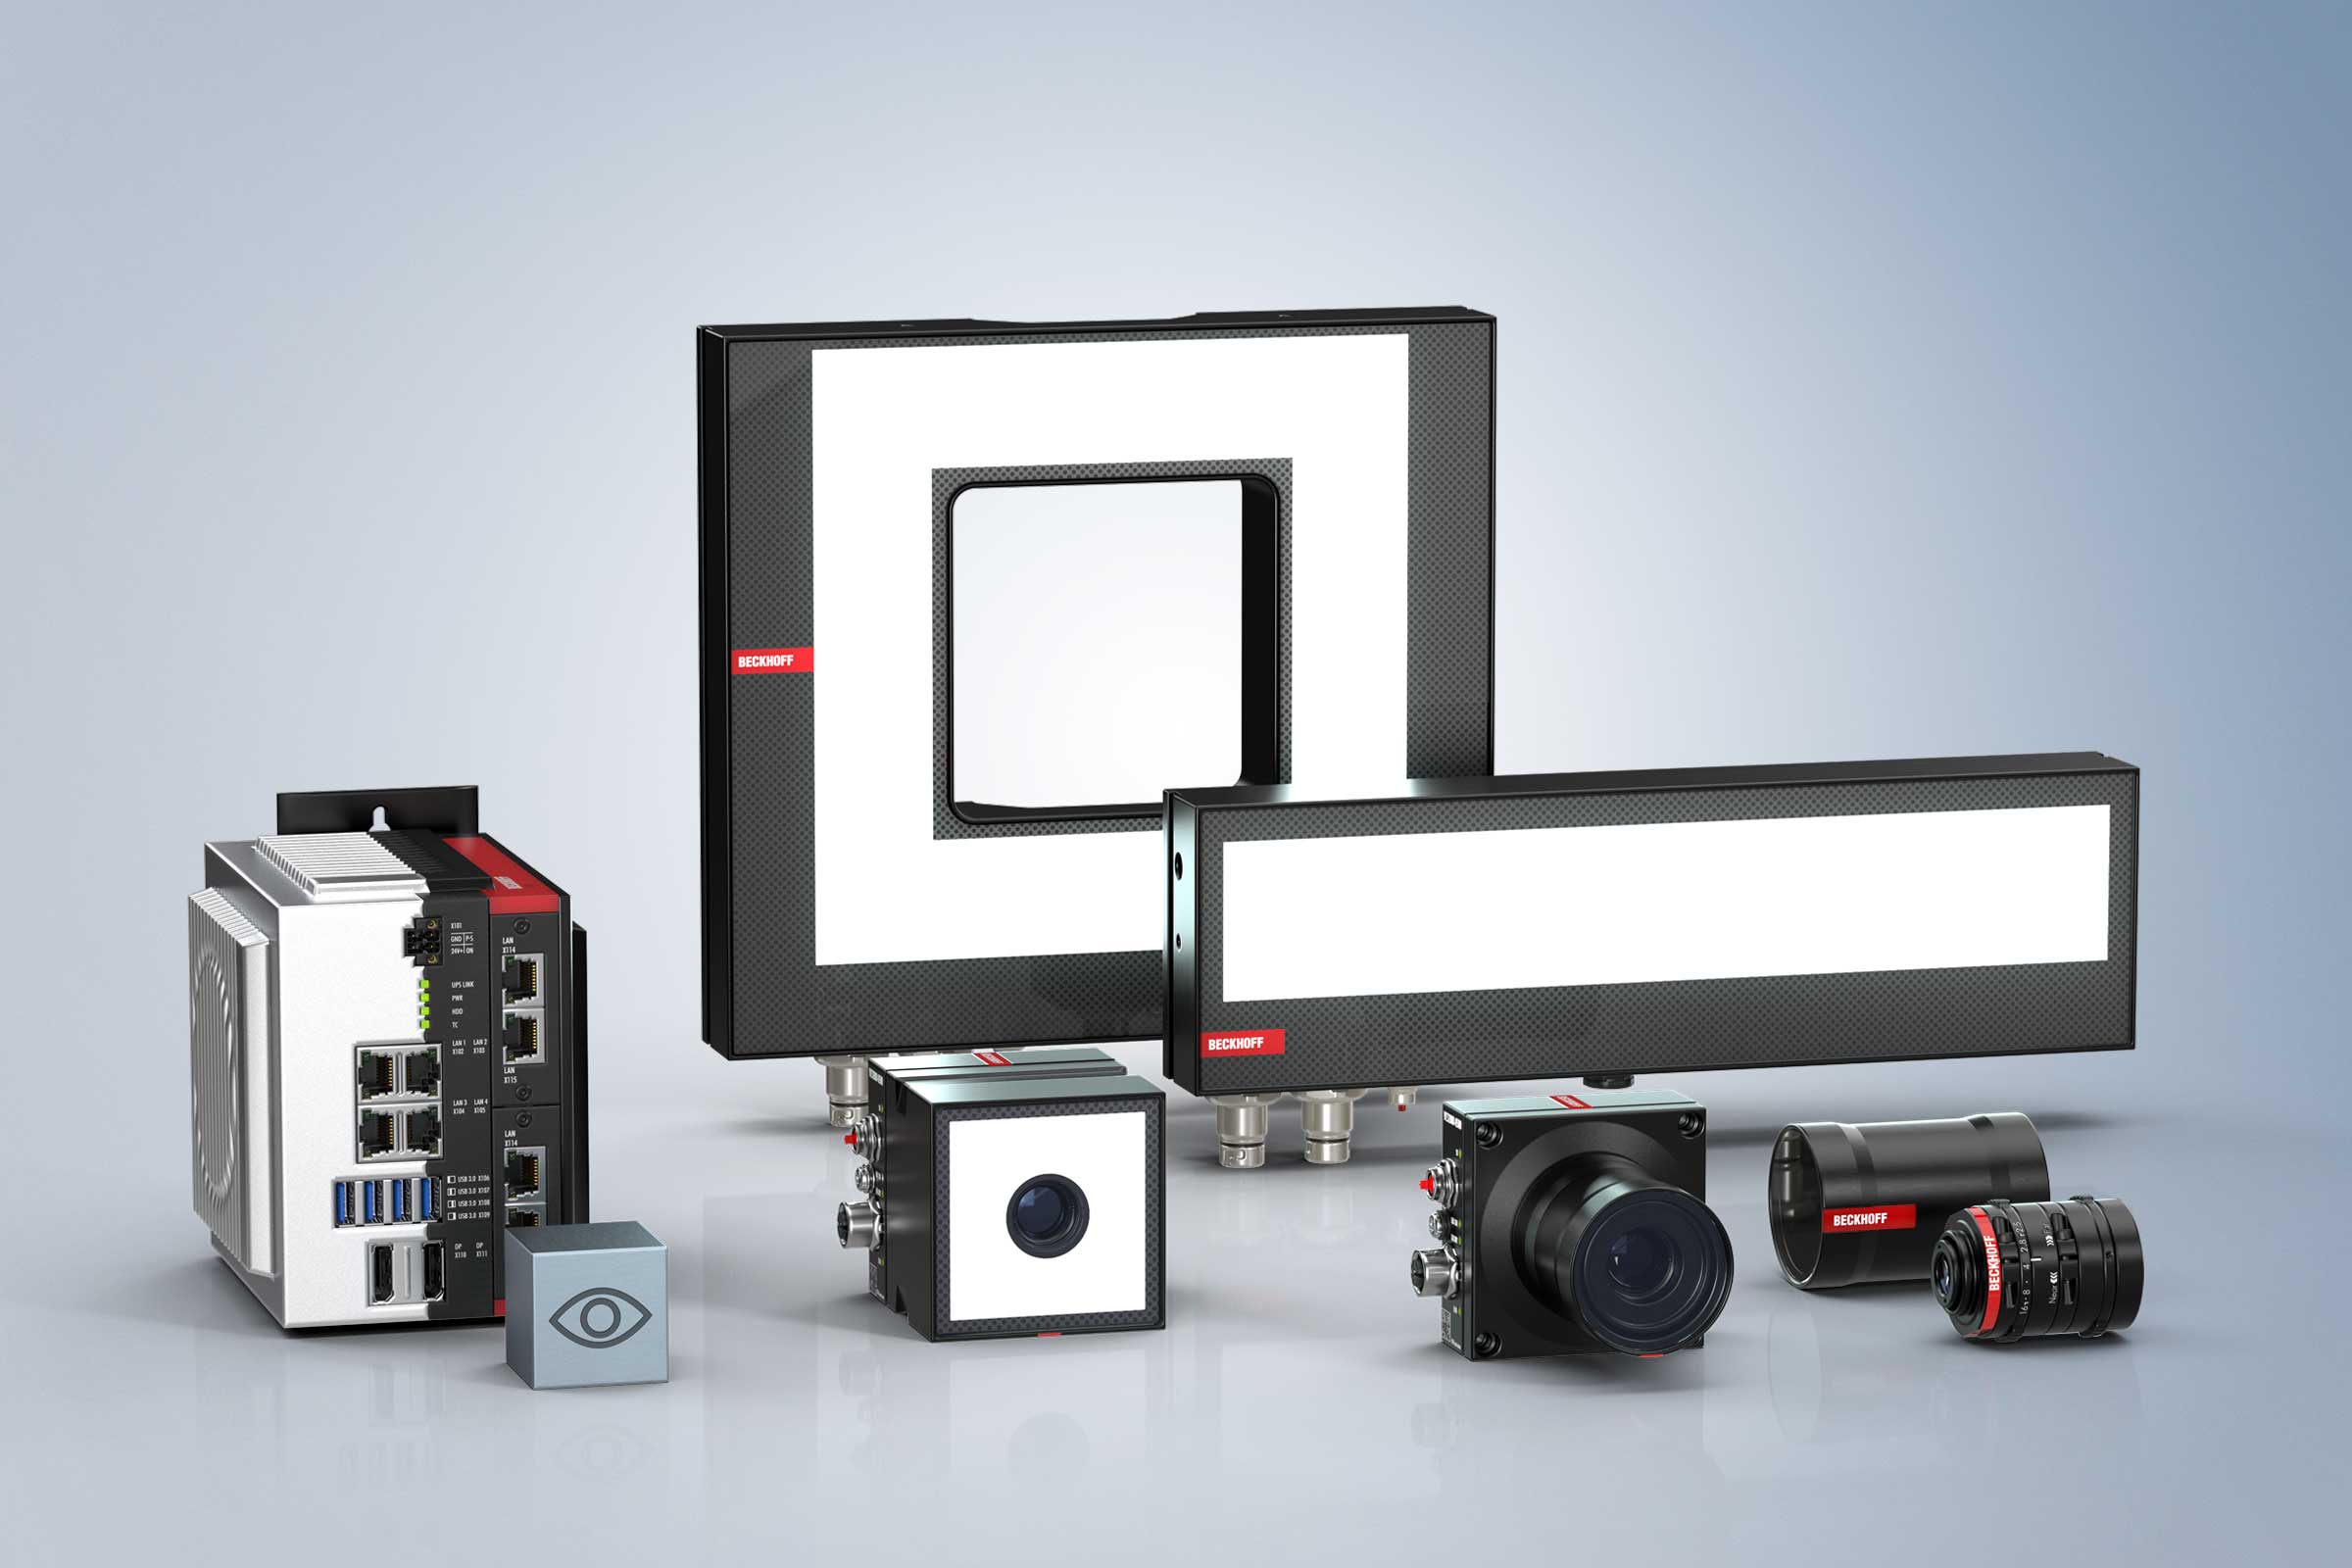 Comprehensive portfolio ranging from camera, illumination, and lenses through to TwinCAT Vision software 